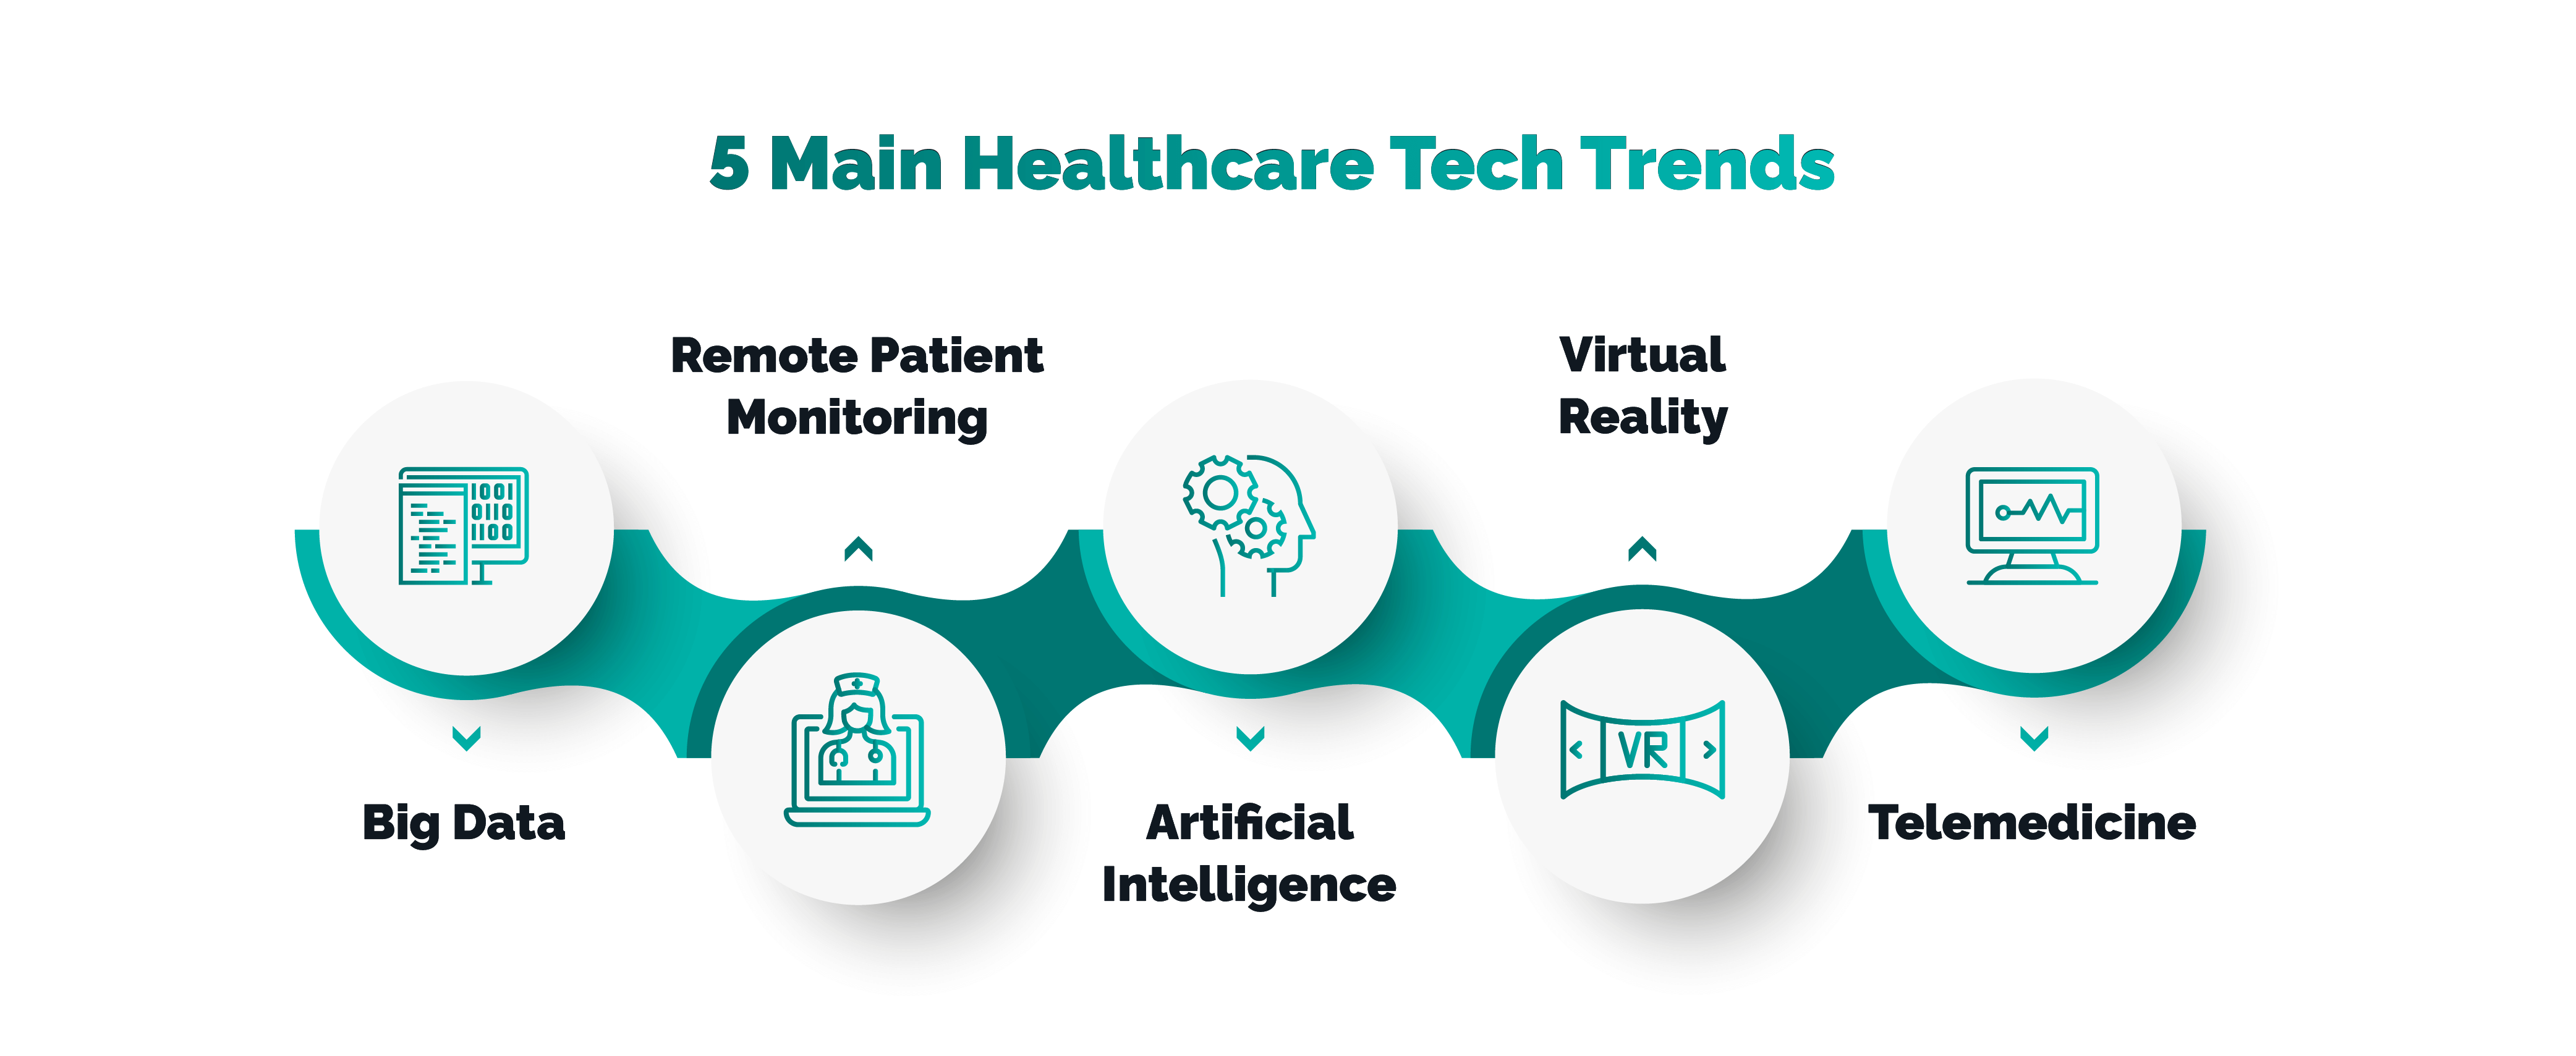 5 Main Healthcare Tech Trends